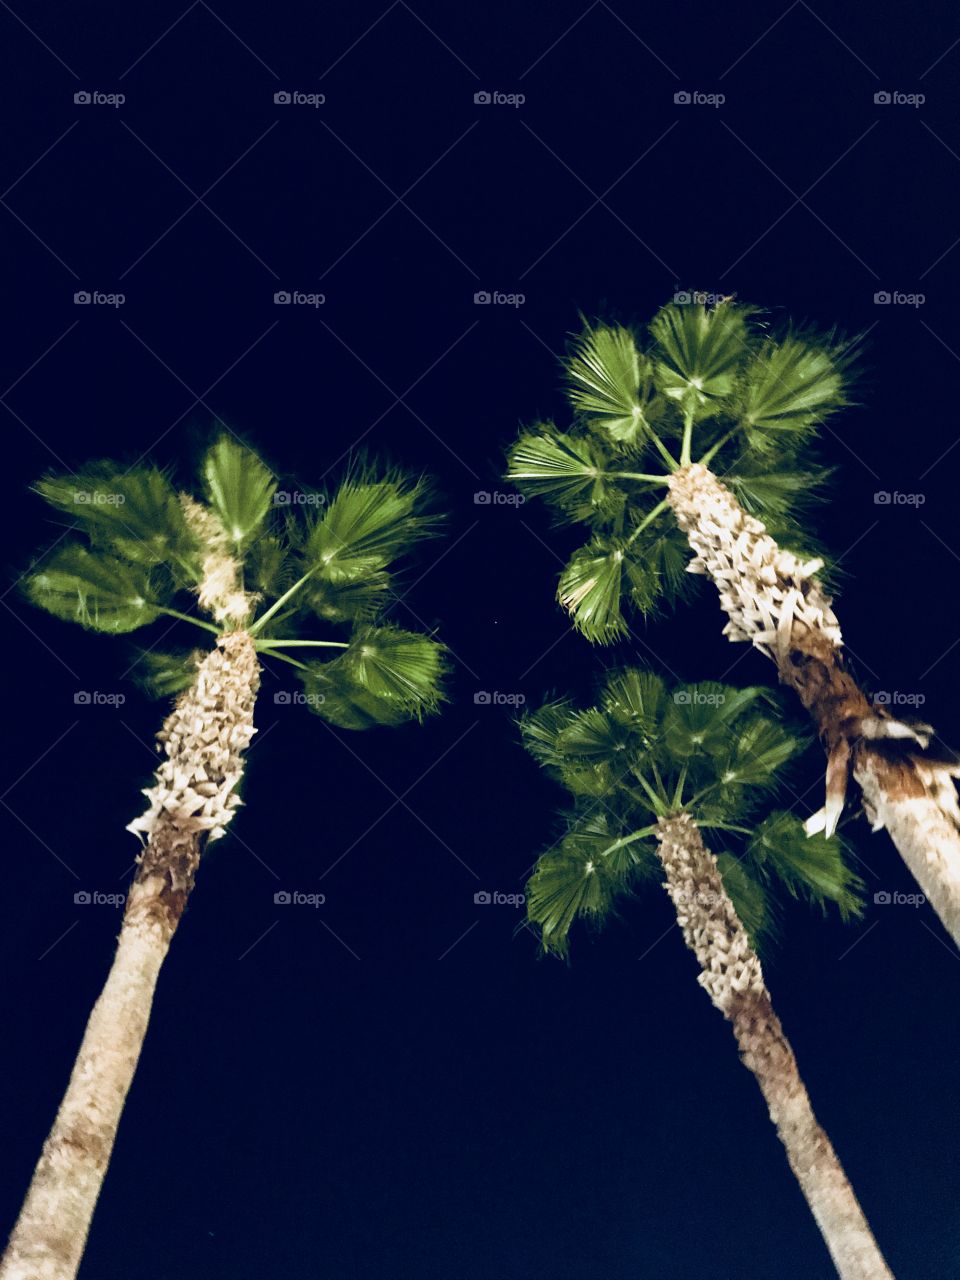 Nighttime palms